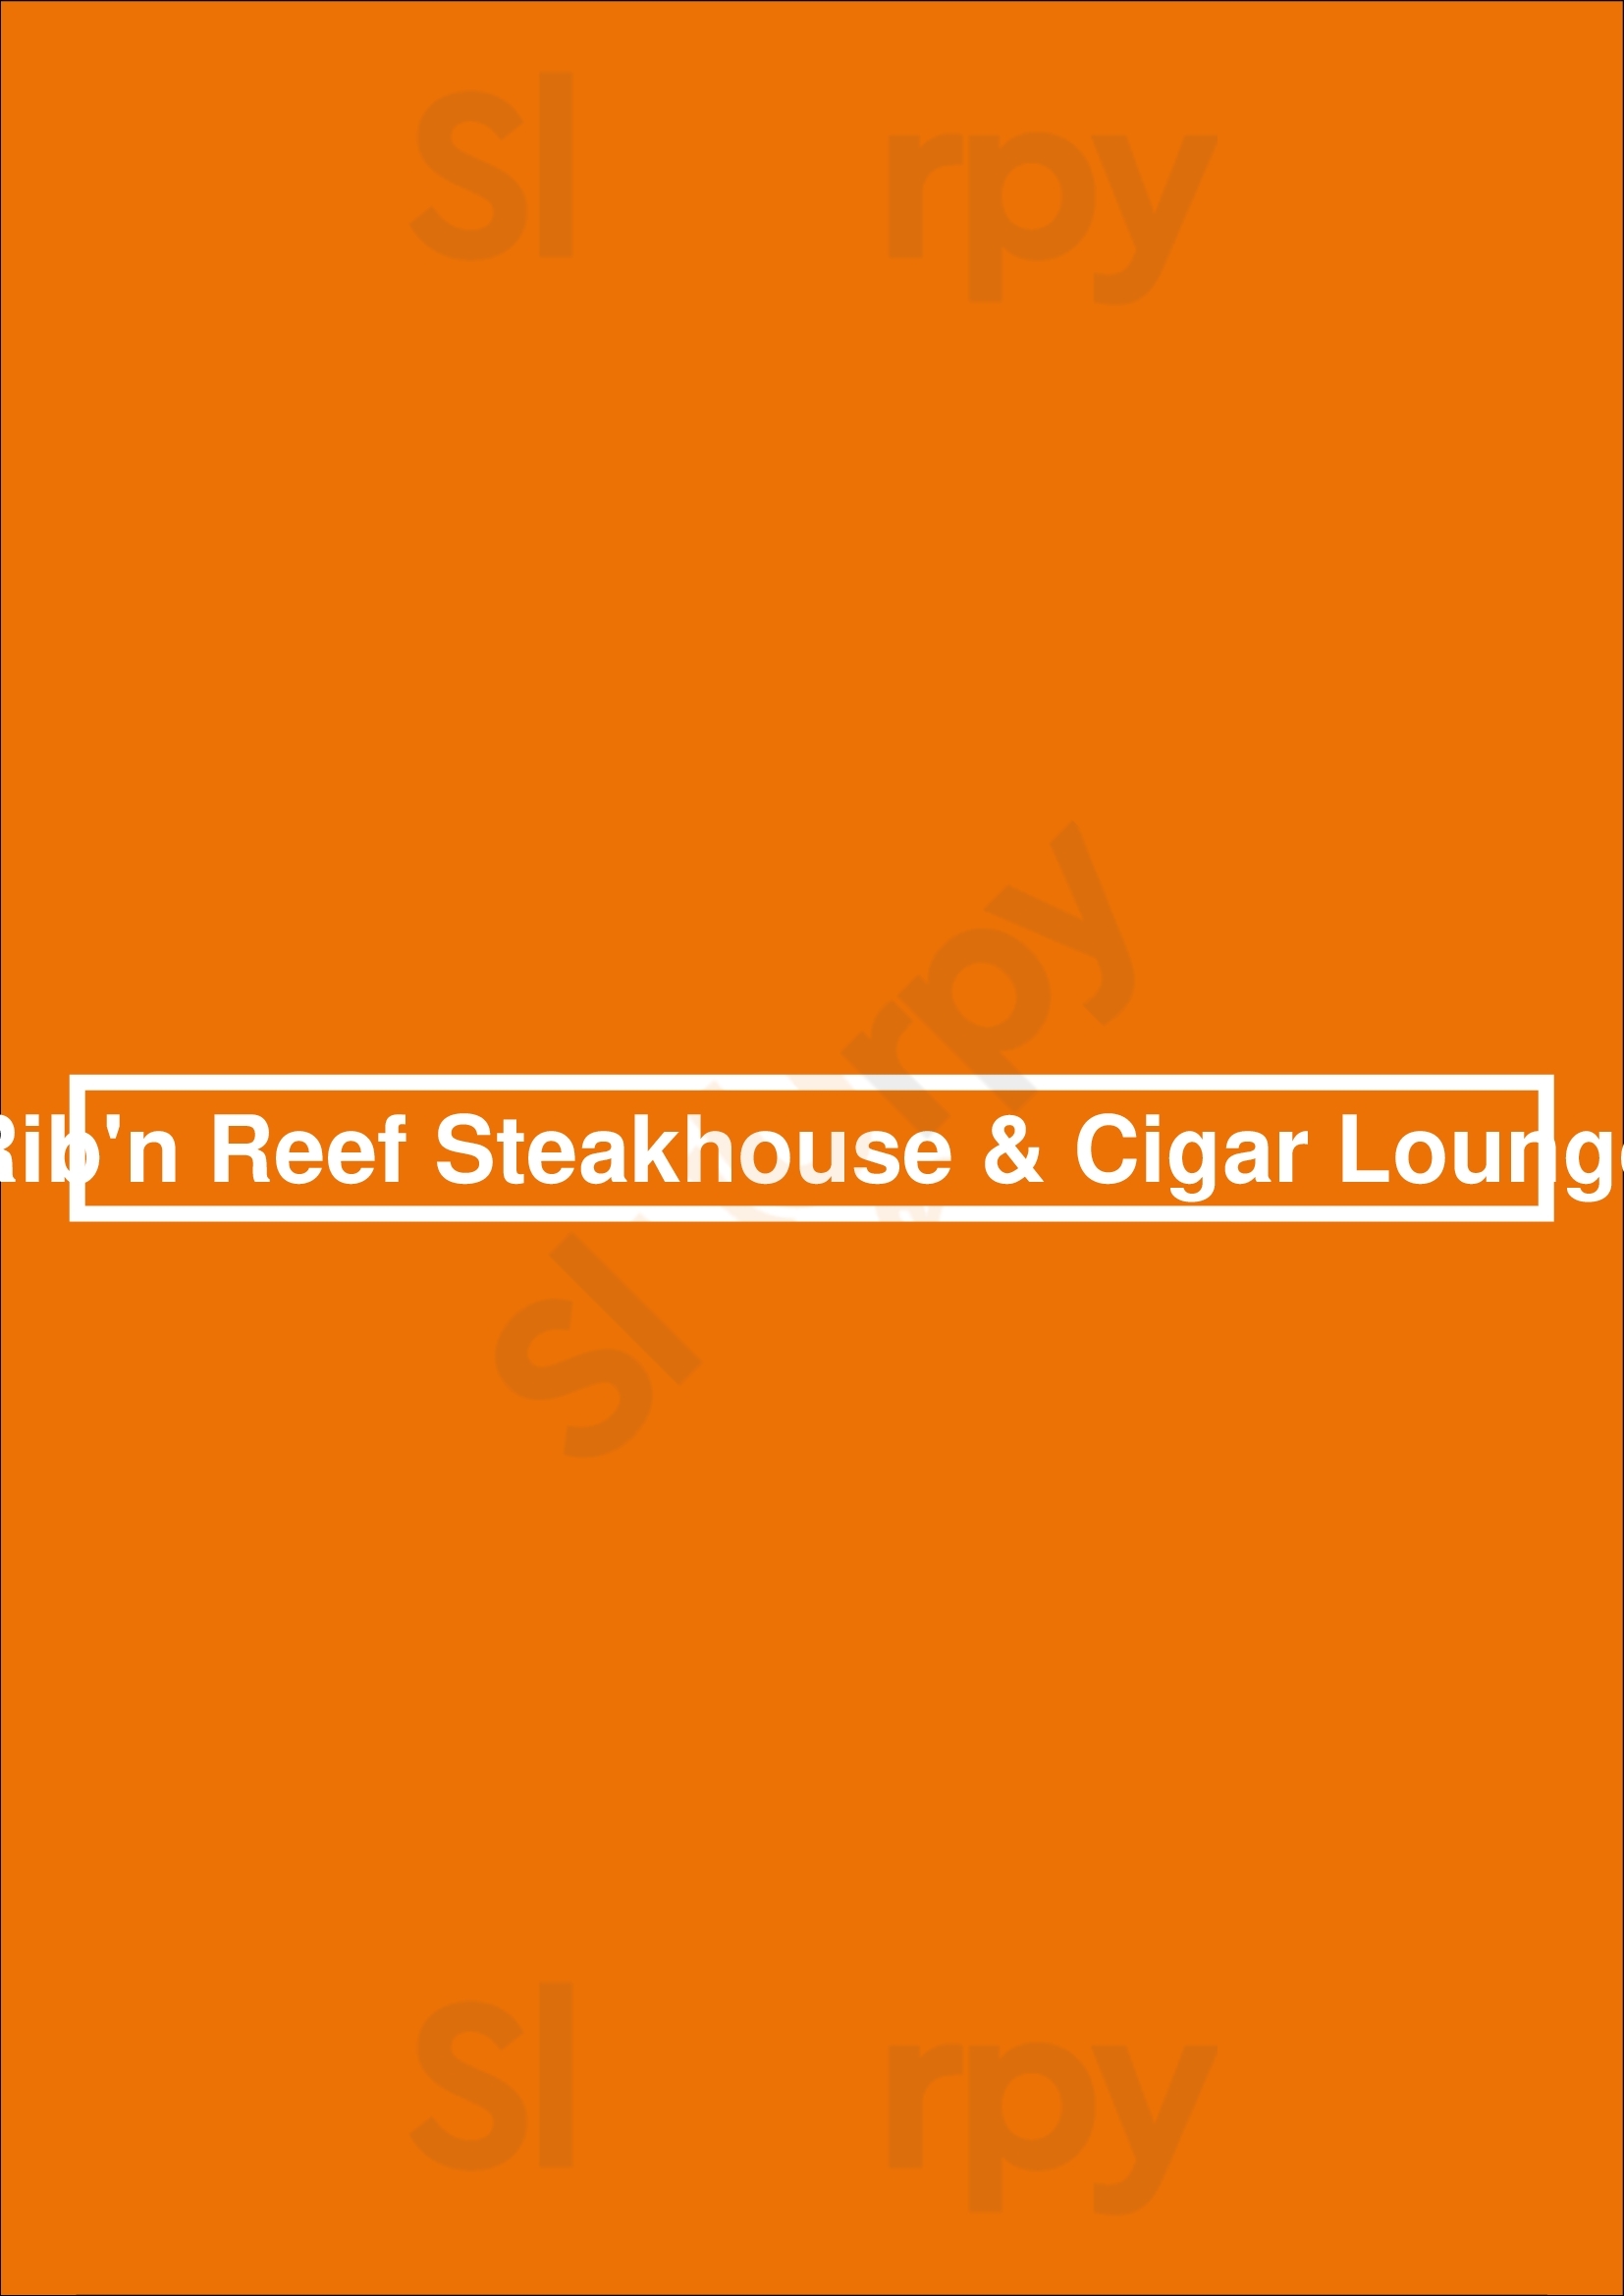 Rib'n Reef Steakhouse And Cigar Lounge Montreal Menu - 1